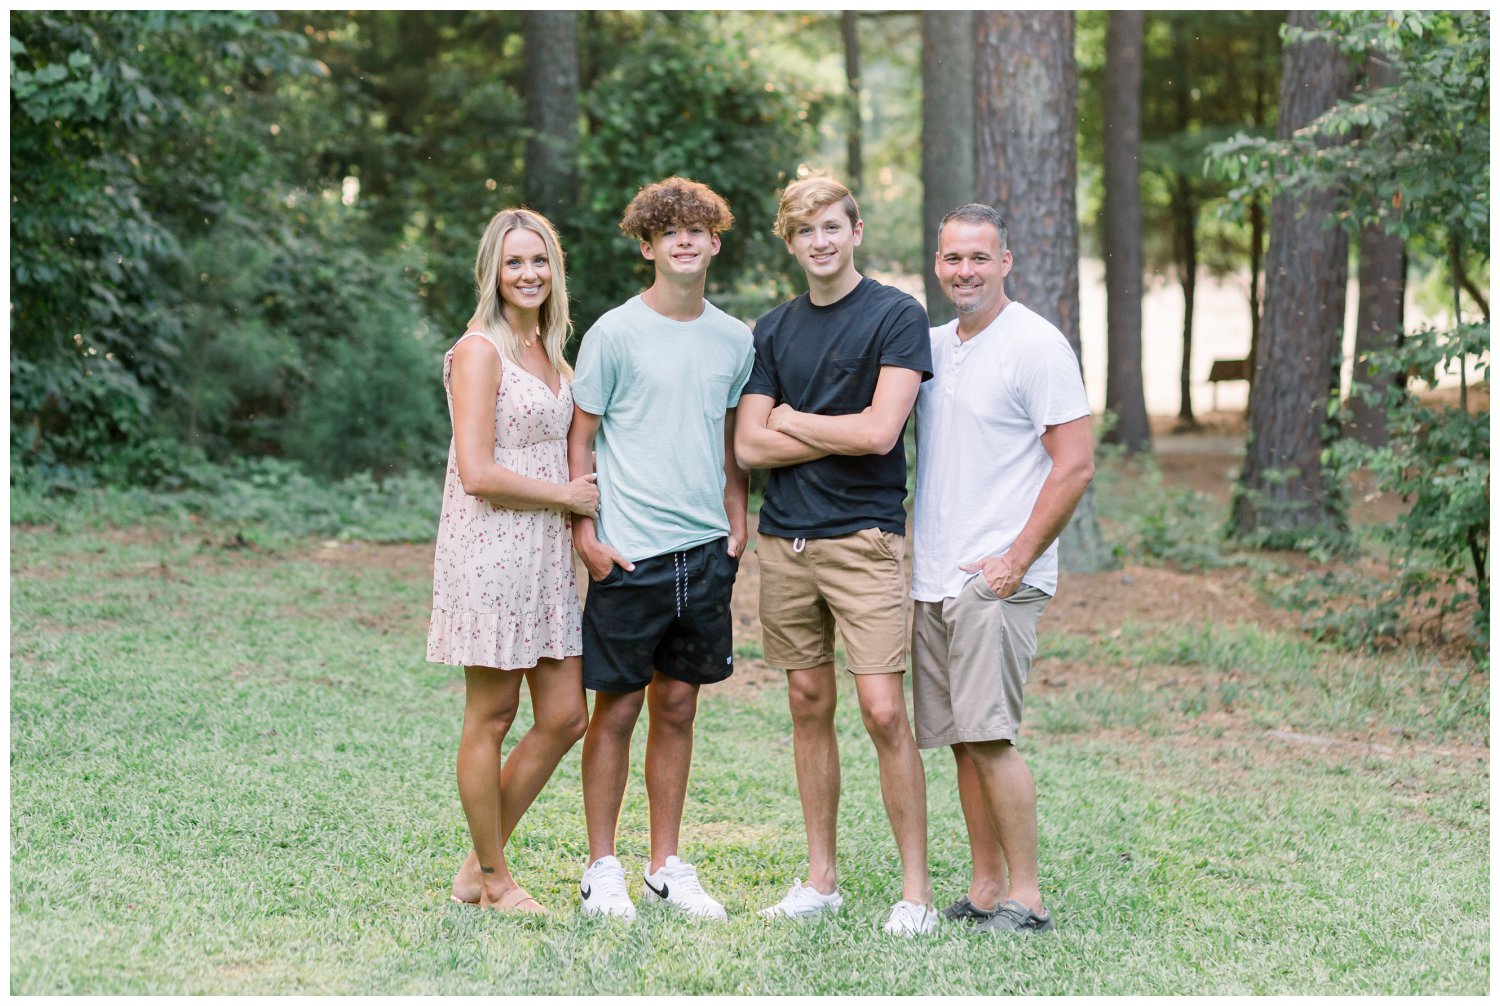 Summertime Jetton Park family photos in Charlotte North Carolina